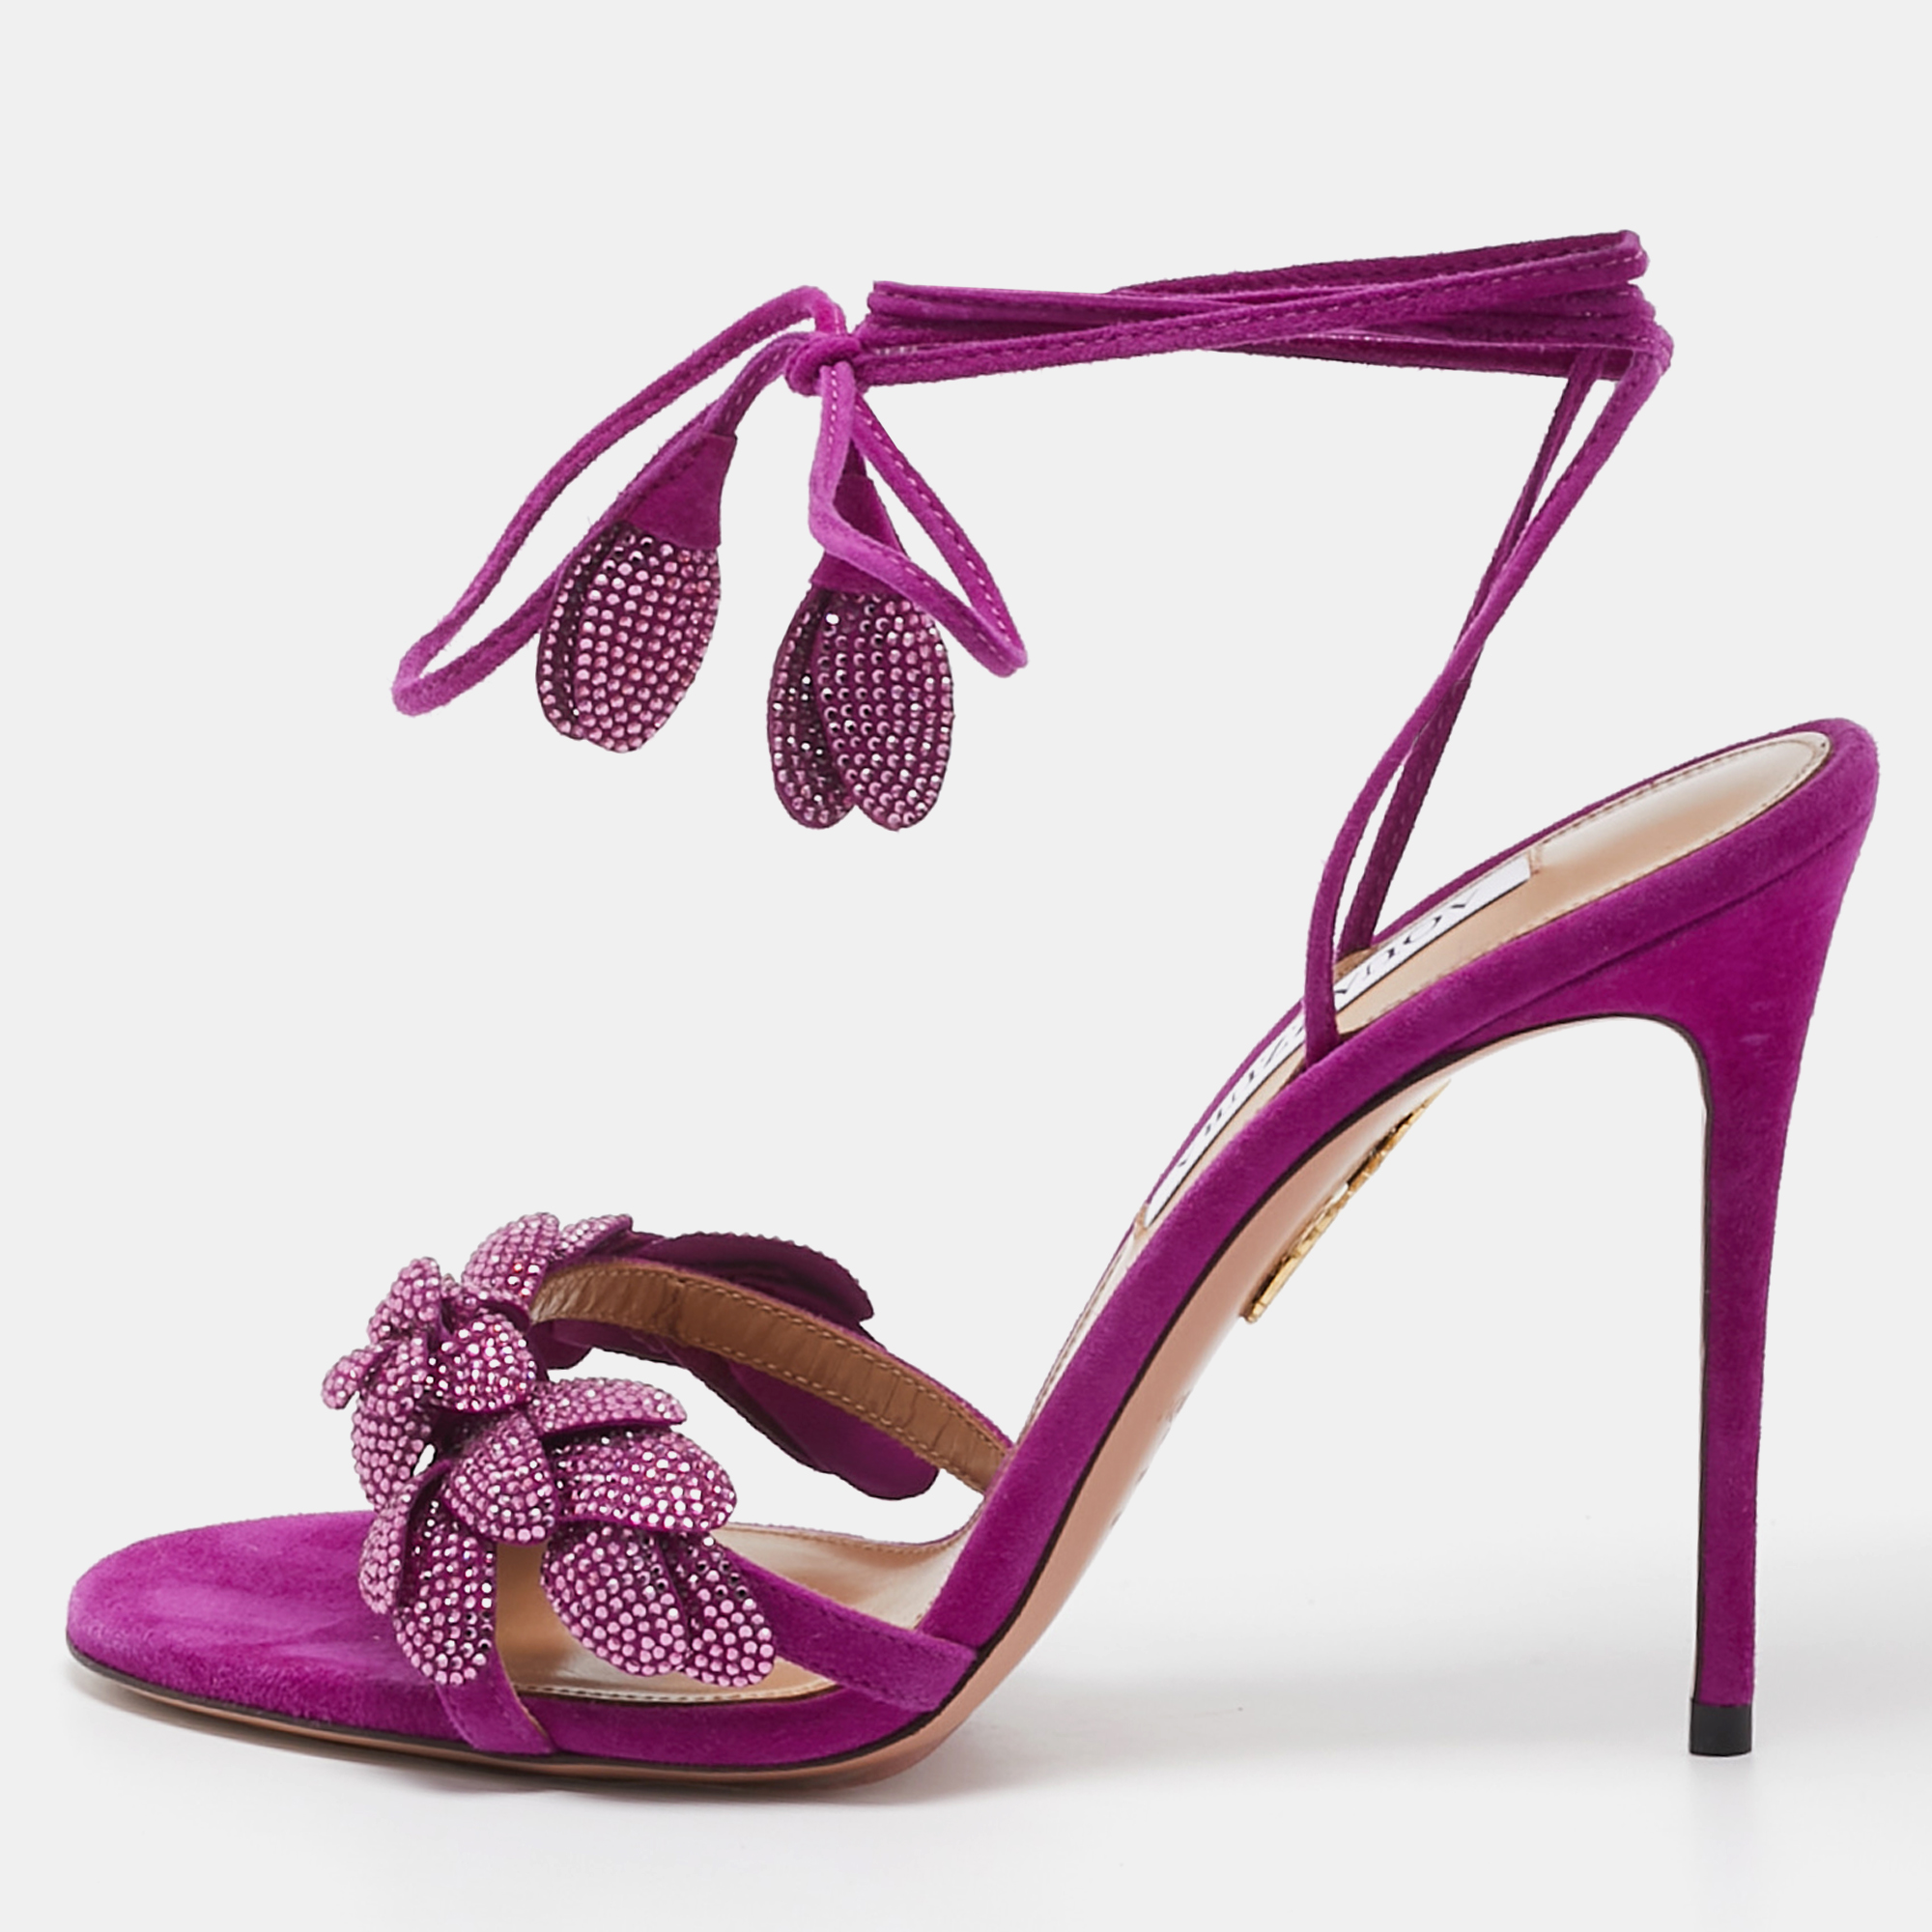 Aquazzura Purple Suede Monaco Embellished Ankle Wrap Sandals Size 38.5